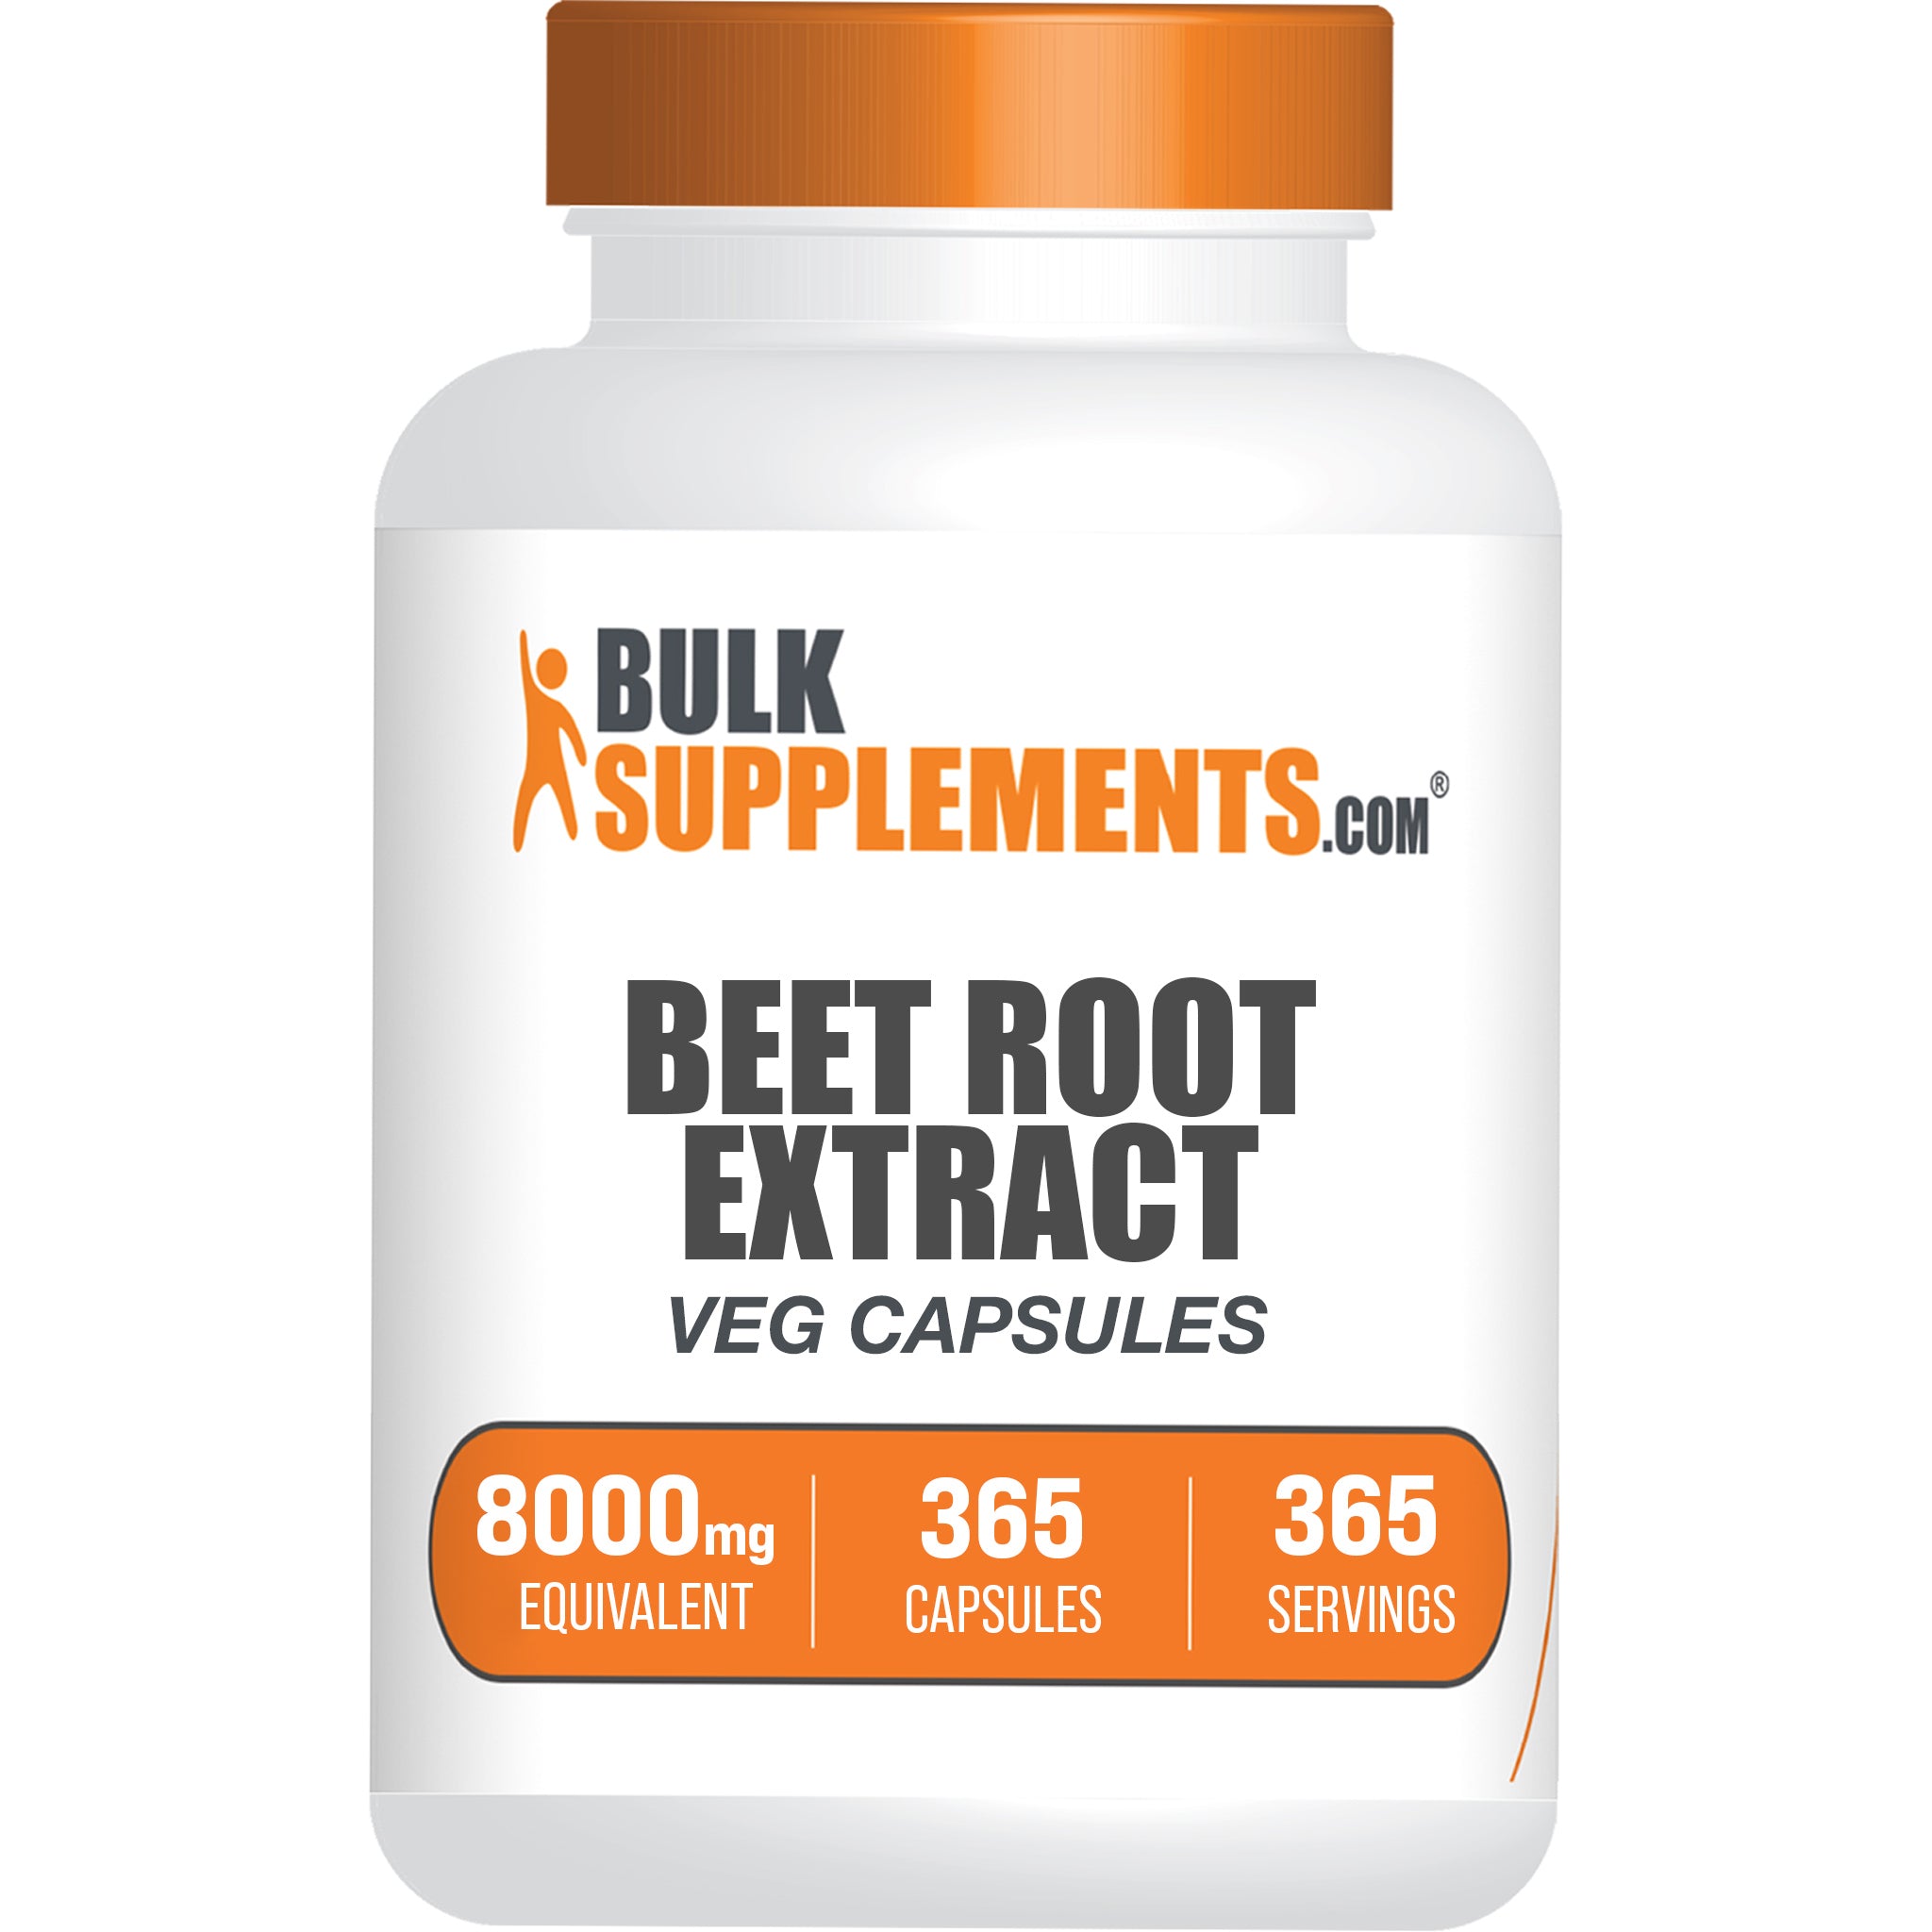 BulkSupplements.com Beet Root Extract 365 ct Capsules Bottle